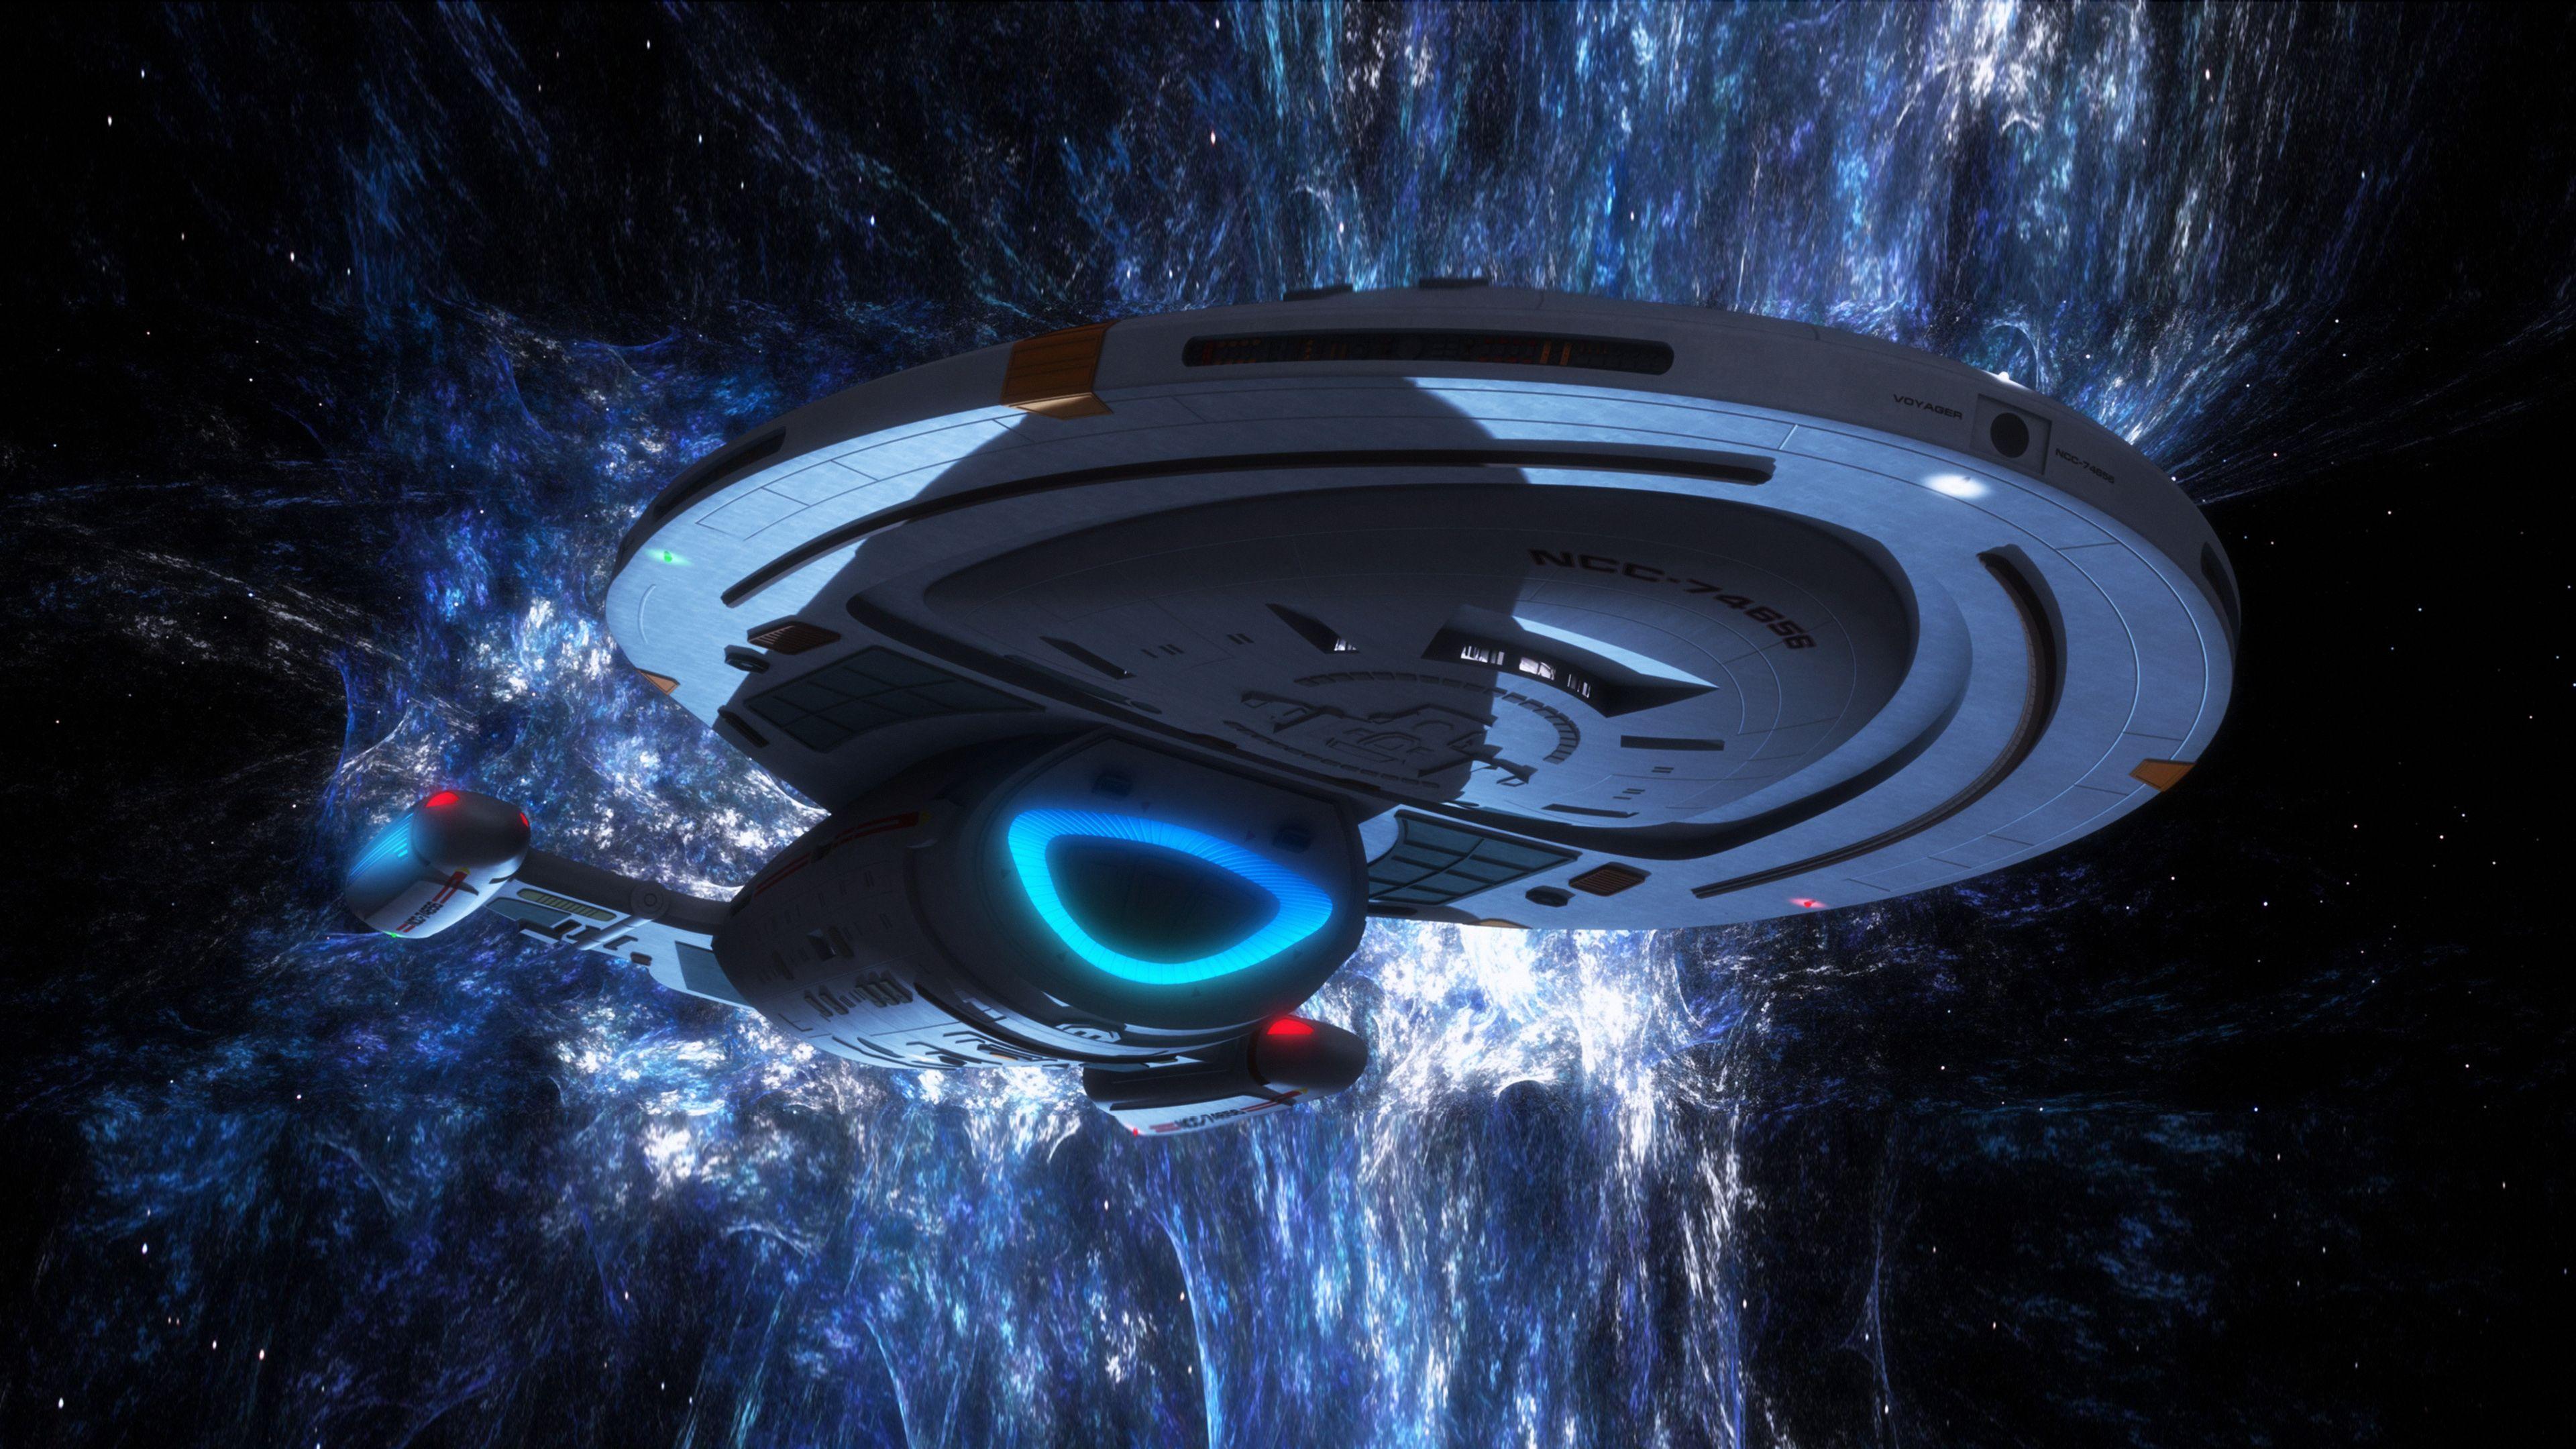 Star Trek Voyager Spaceship Digital Art HD Wallpaper For Mobile